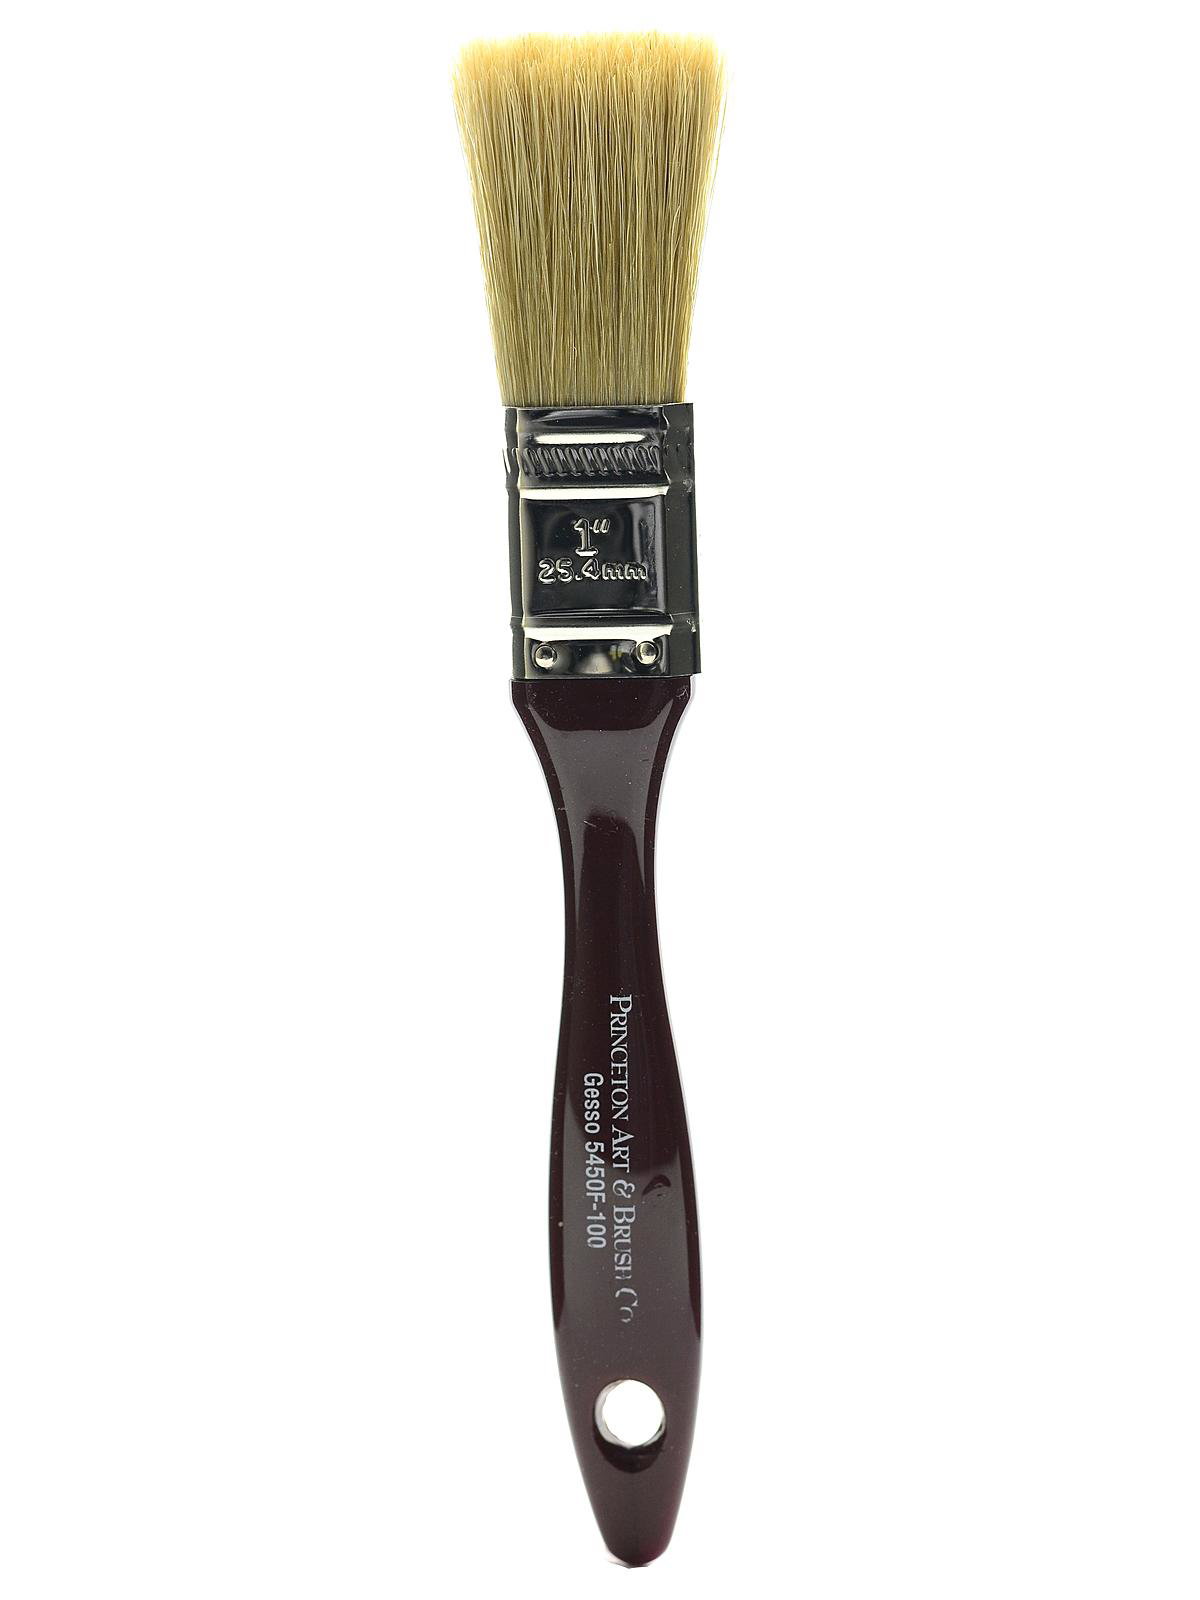 Princeton Gesso Brush - Short Handle, Size 1 Art — Art Department LLC